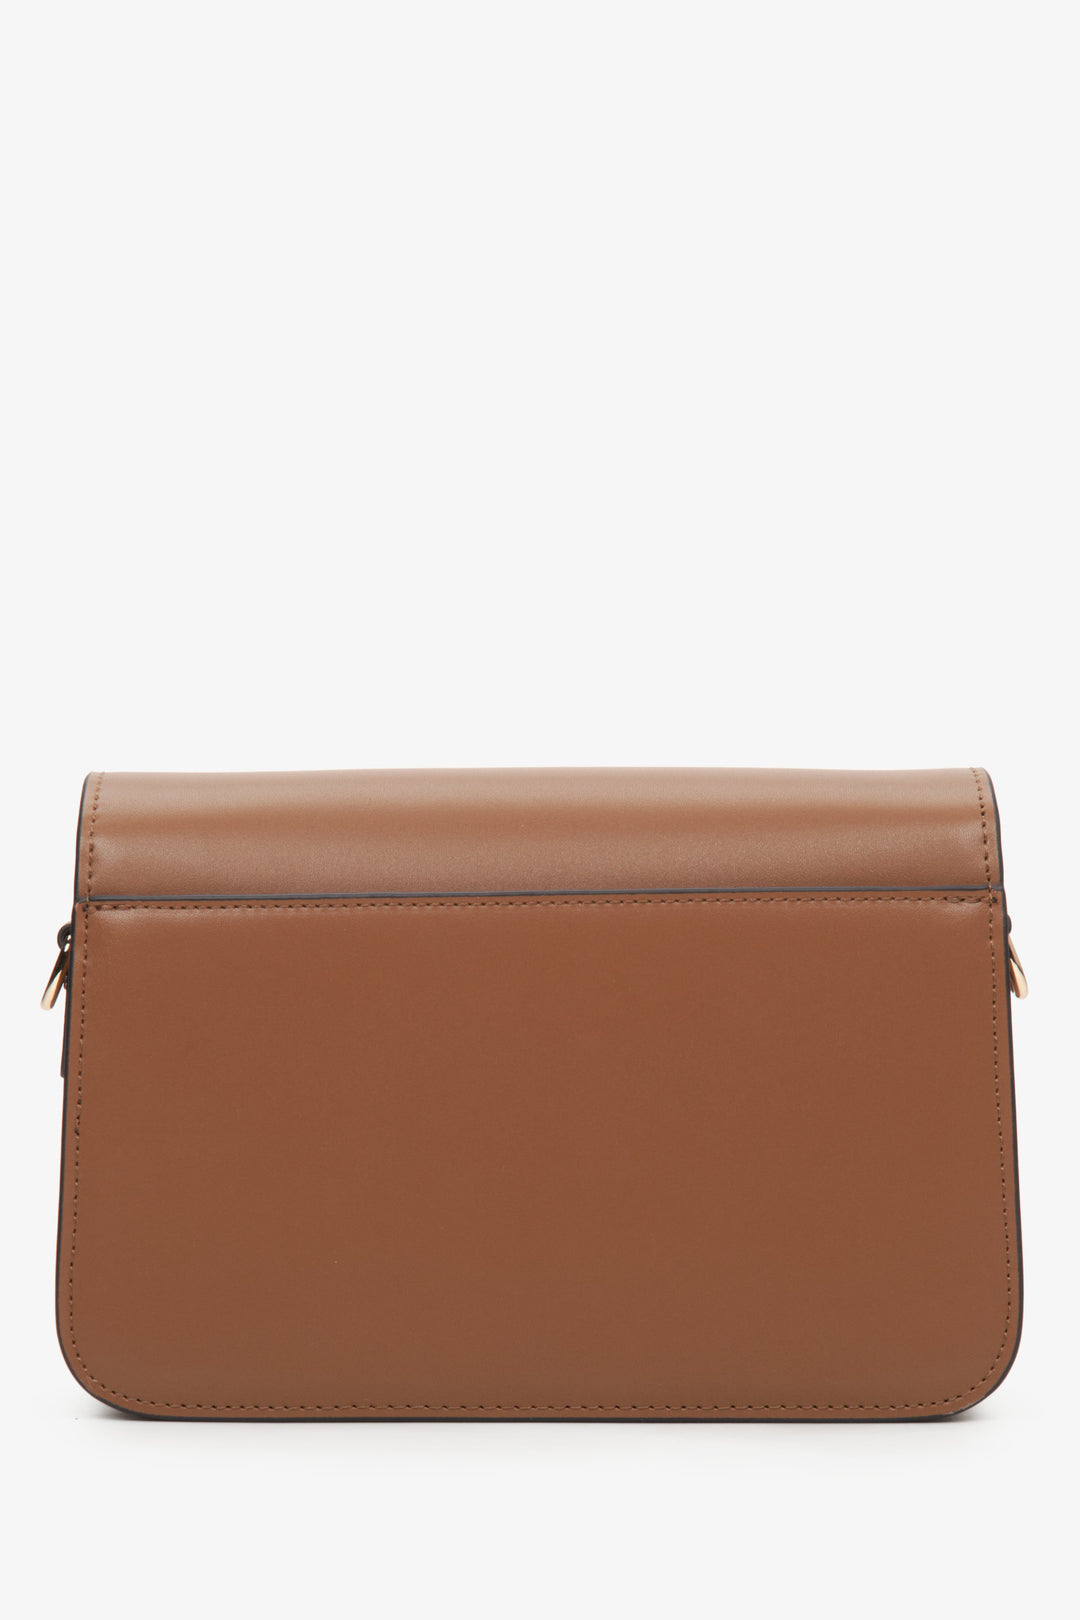 Women's brown handbag with a golden chain Estro - back view.